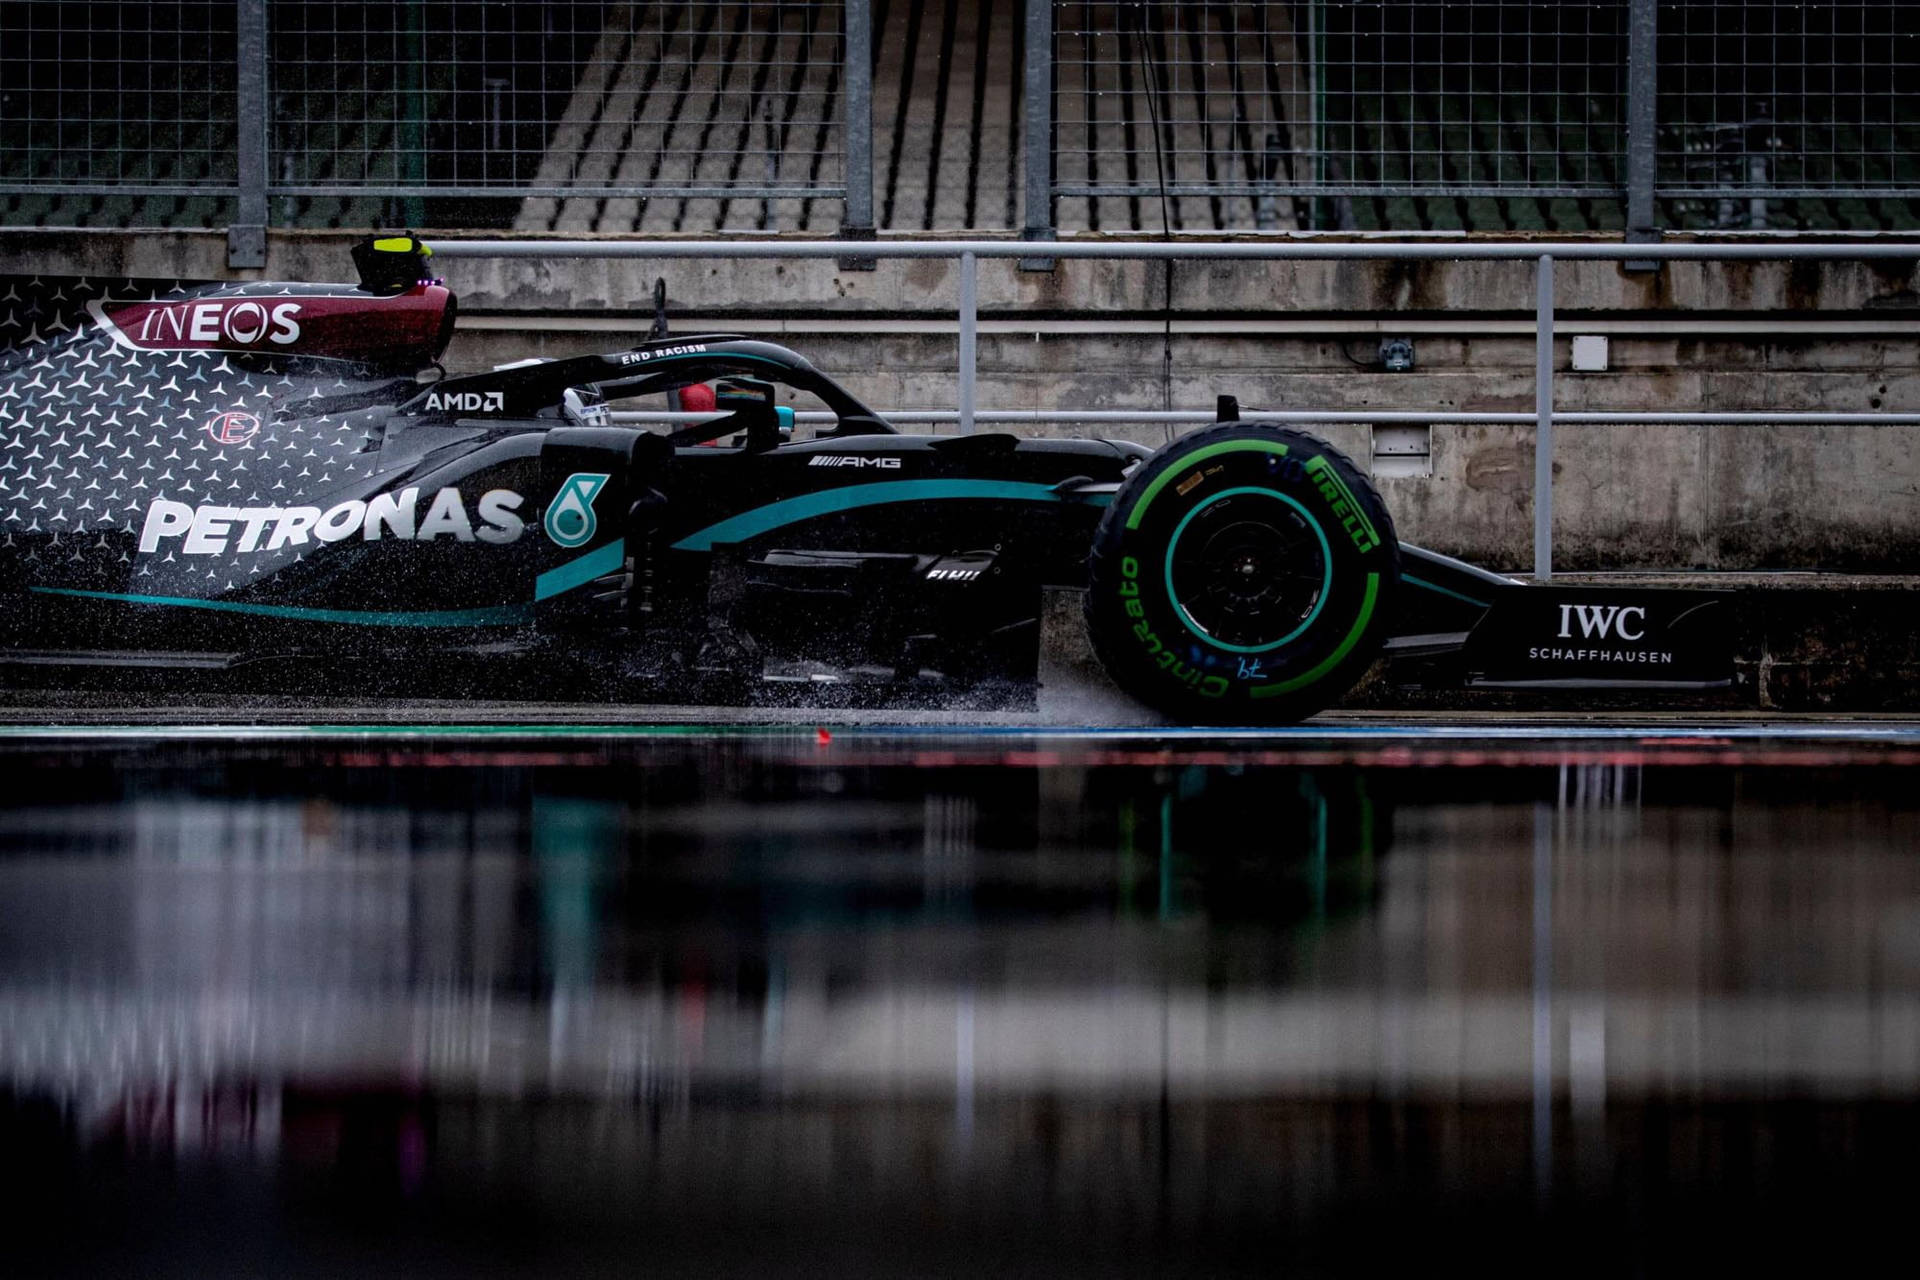 Caption: Mercedes Amg Petronas F1 Racing Car On Track Background